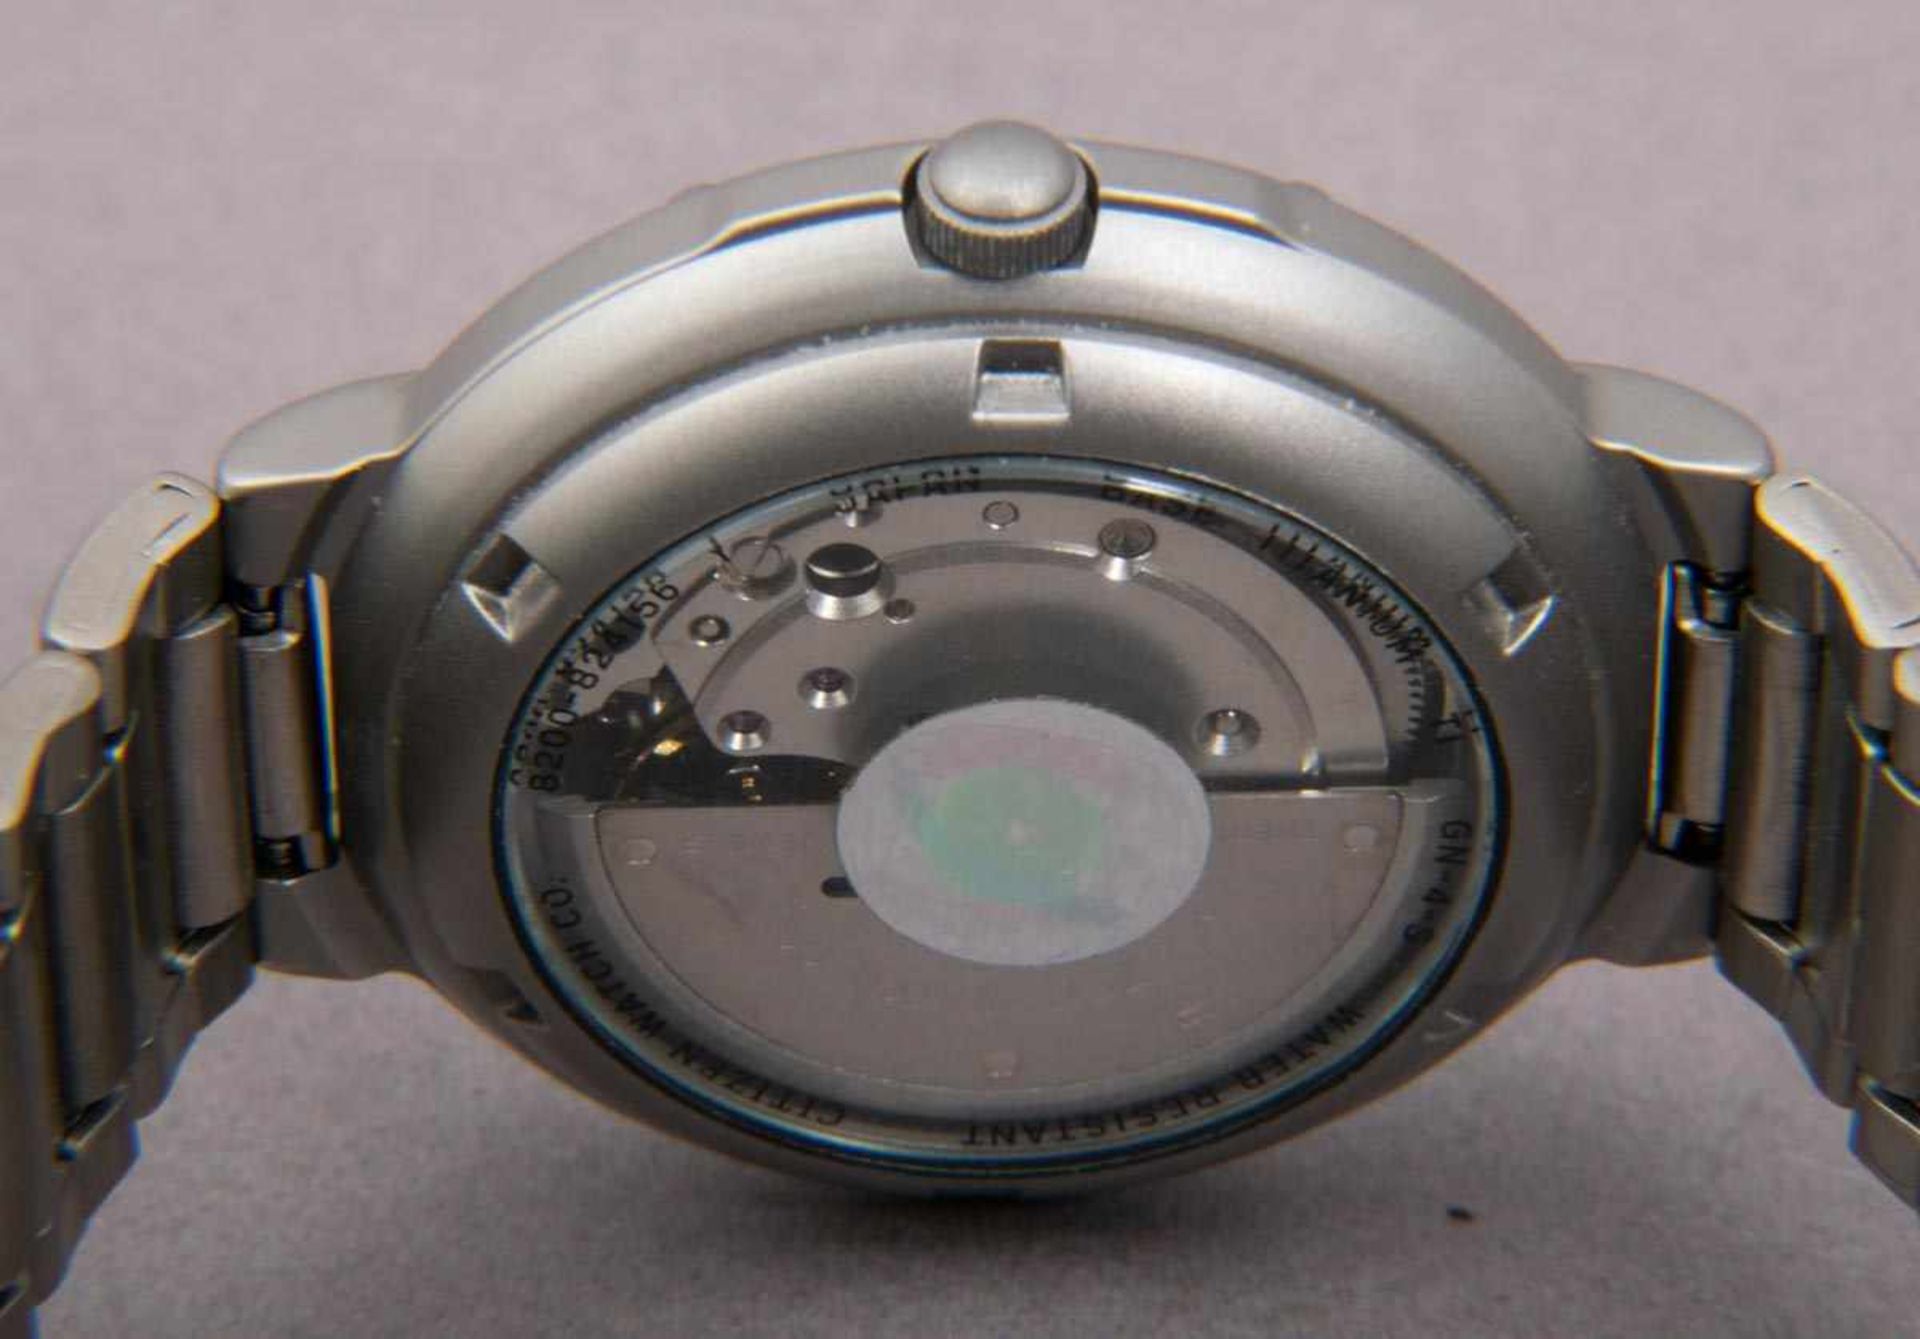 5teiliges Konvolut versch. Armbanduhren, alle ungeprüft. Versch. Alter, Größen, Materialien, - Image 14 of 16